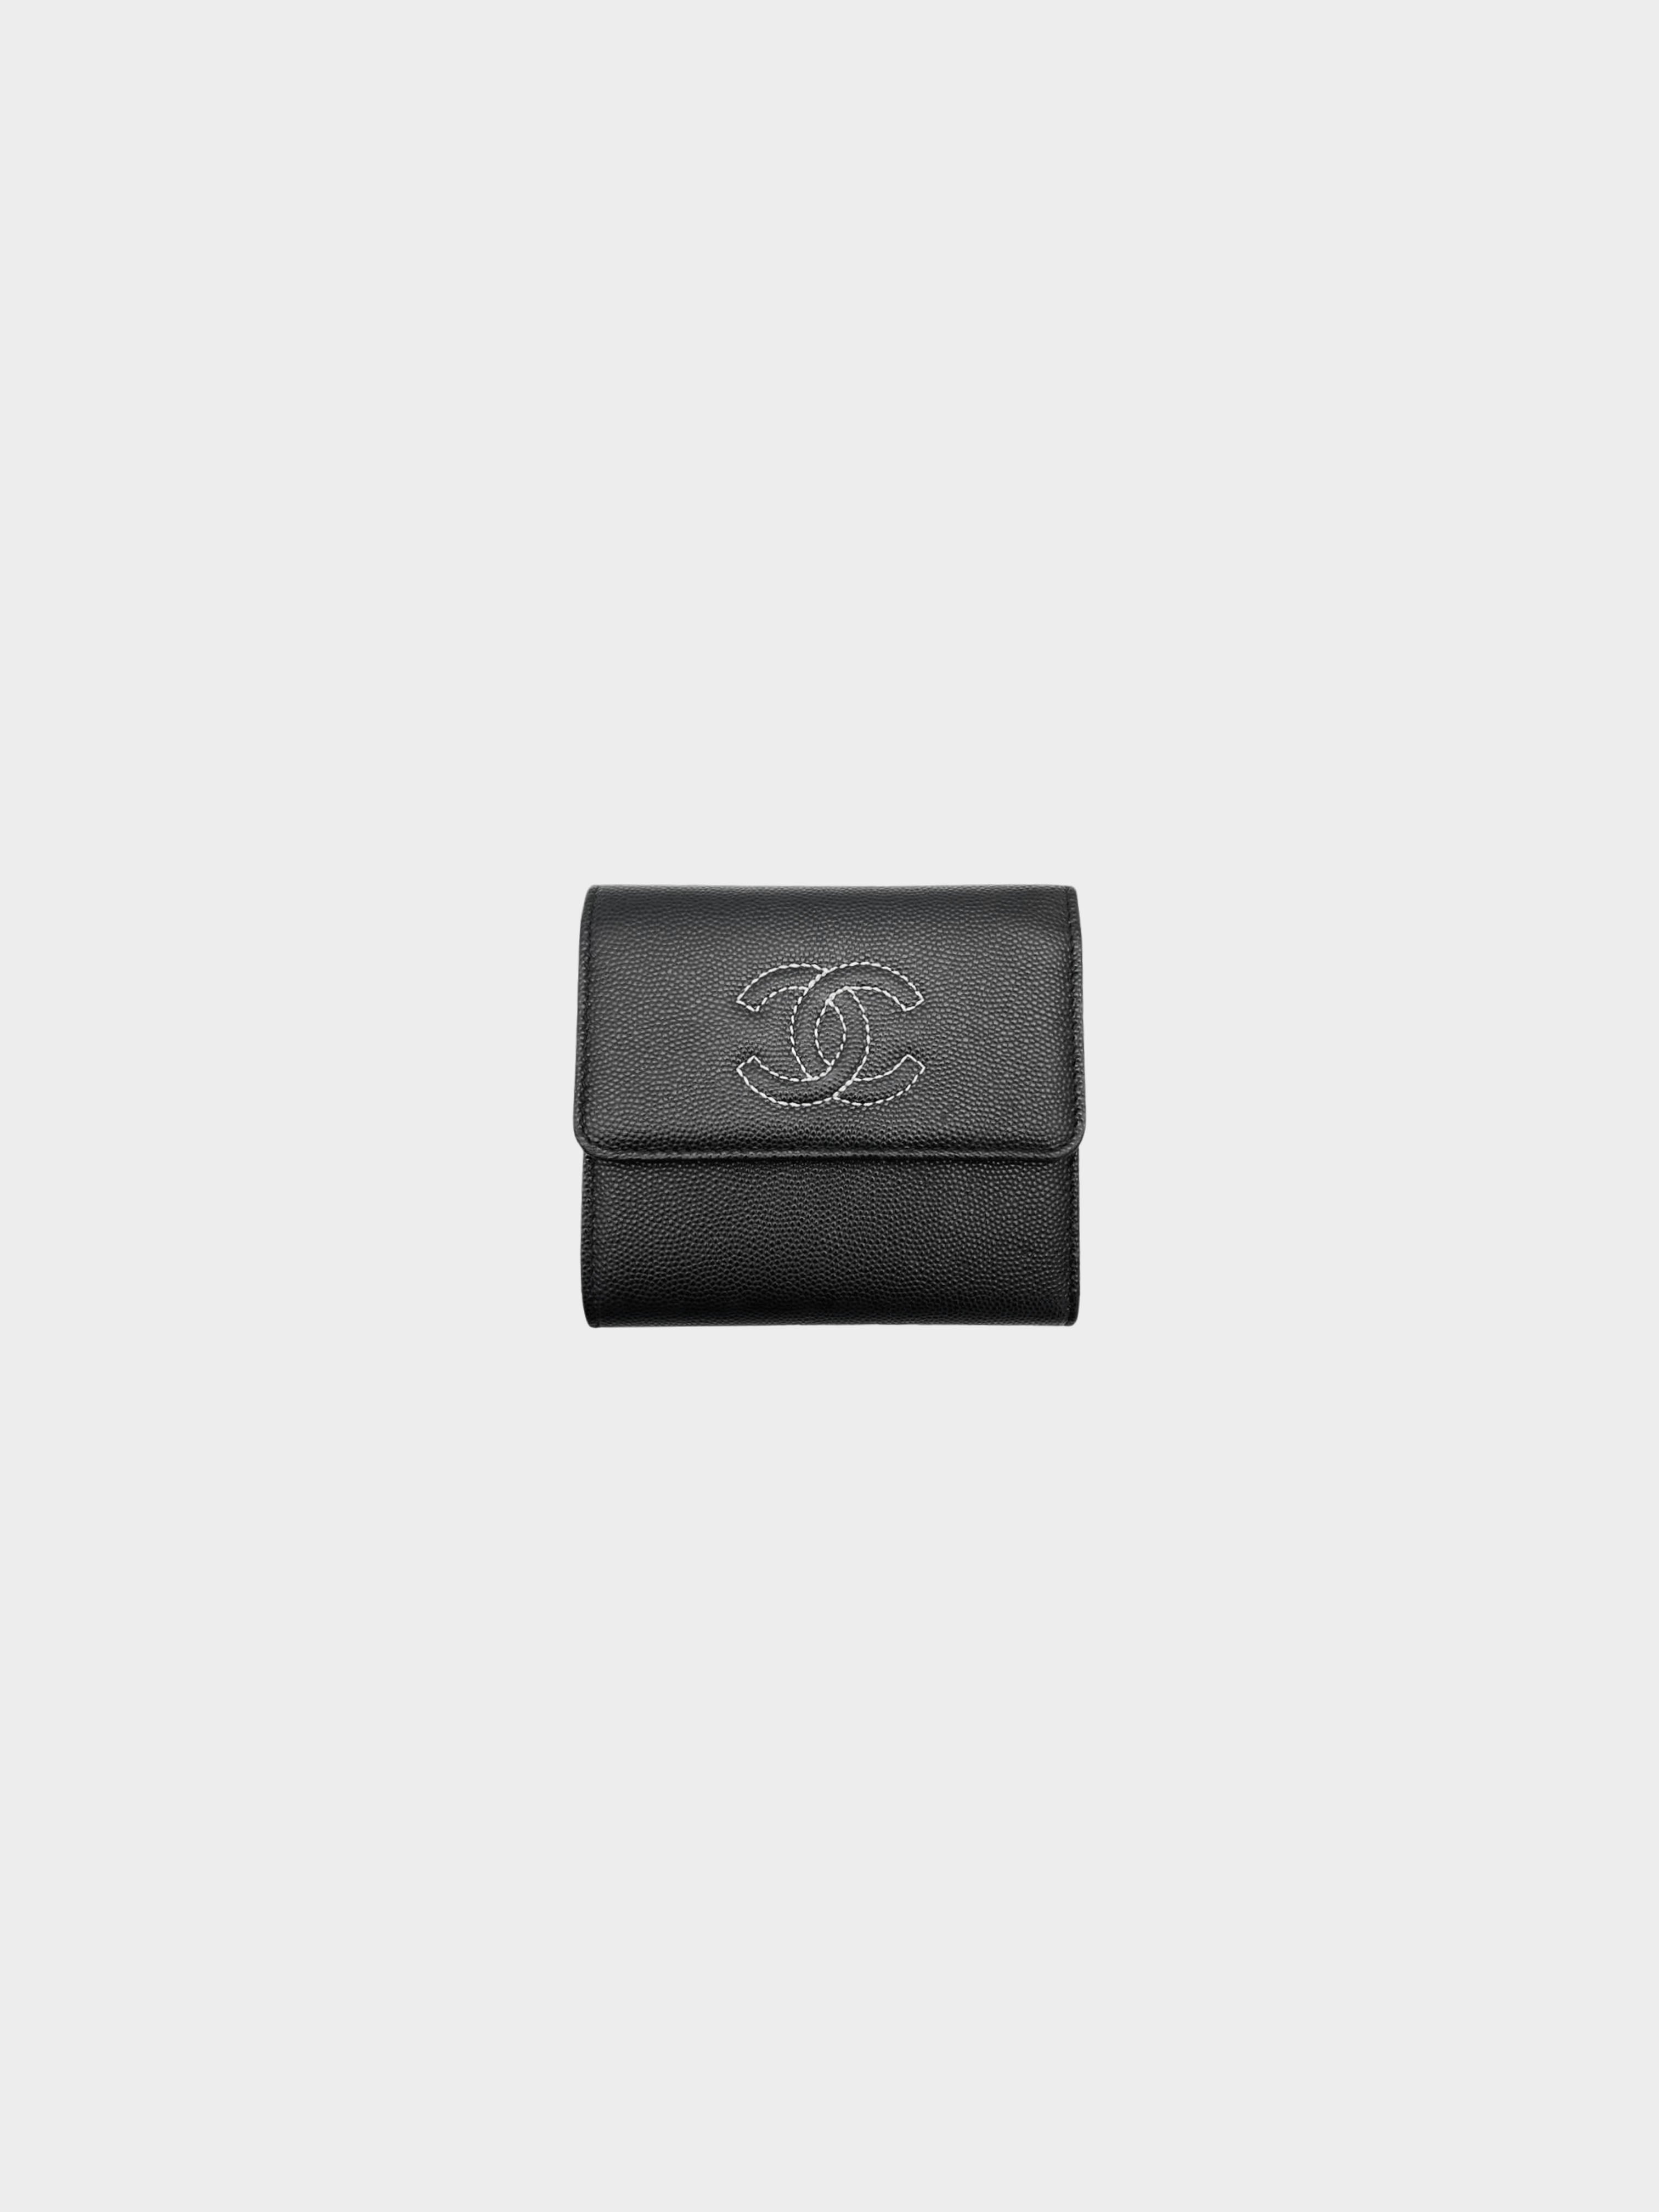 Chanel 2016 Black Caviar Trifold Wallet